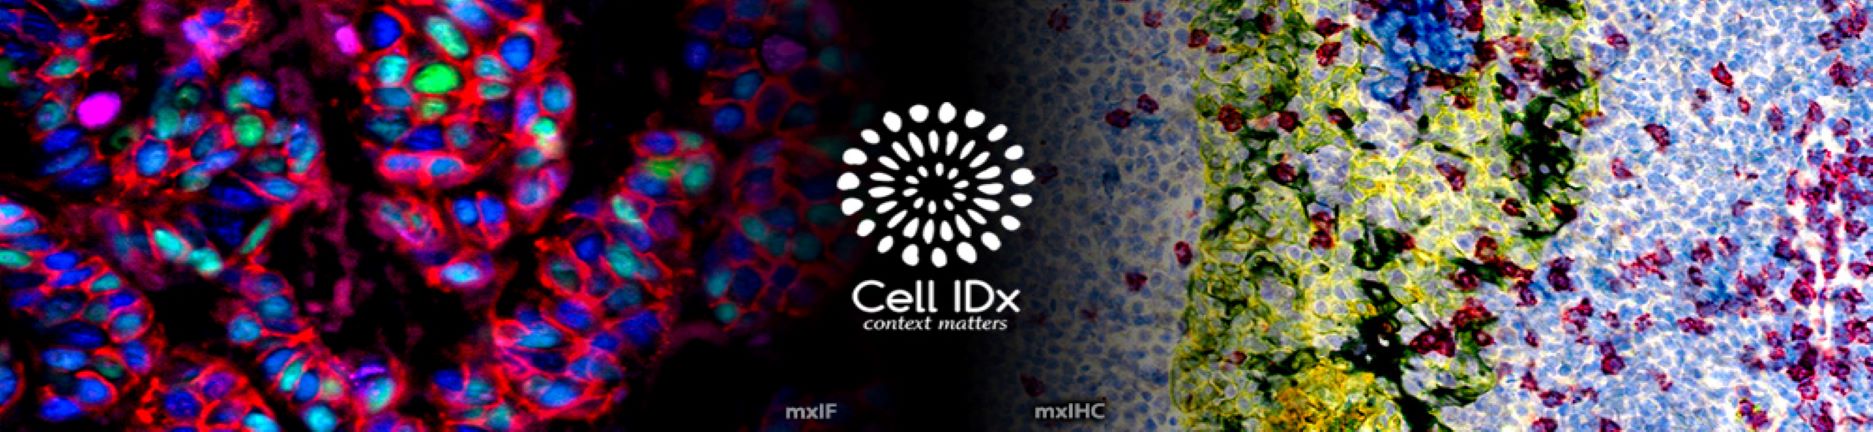 Cell IDX